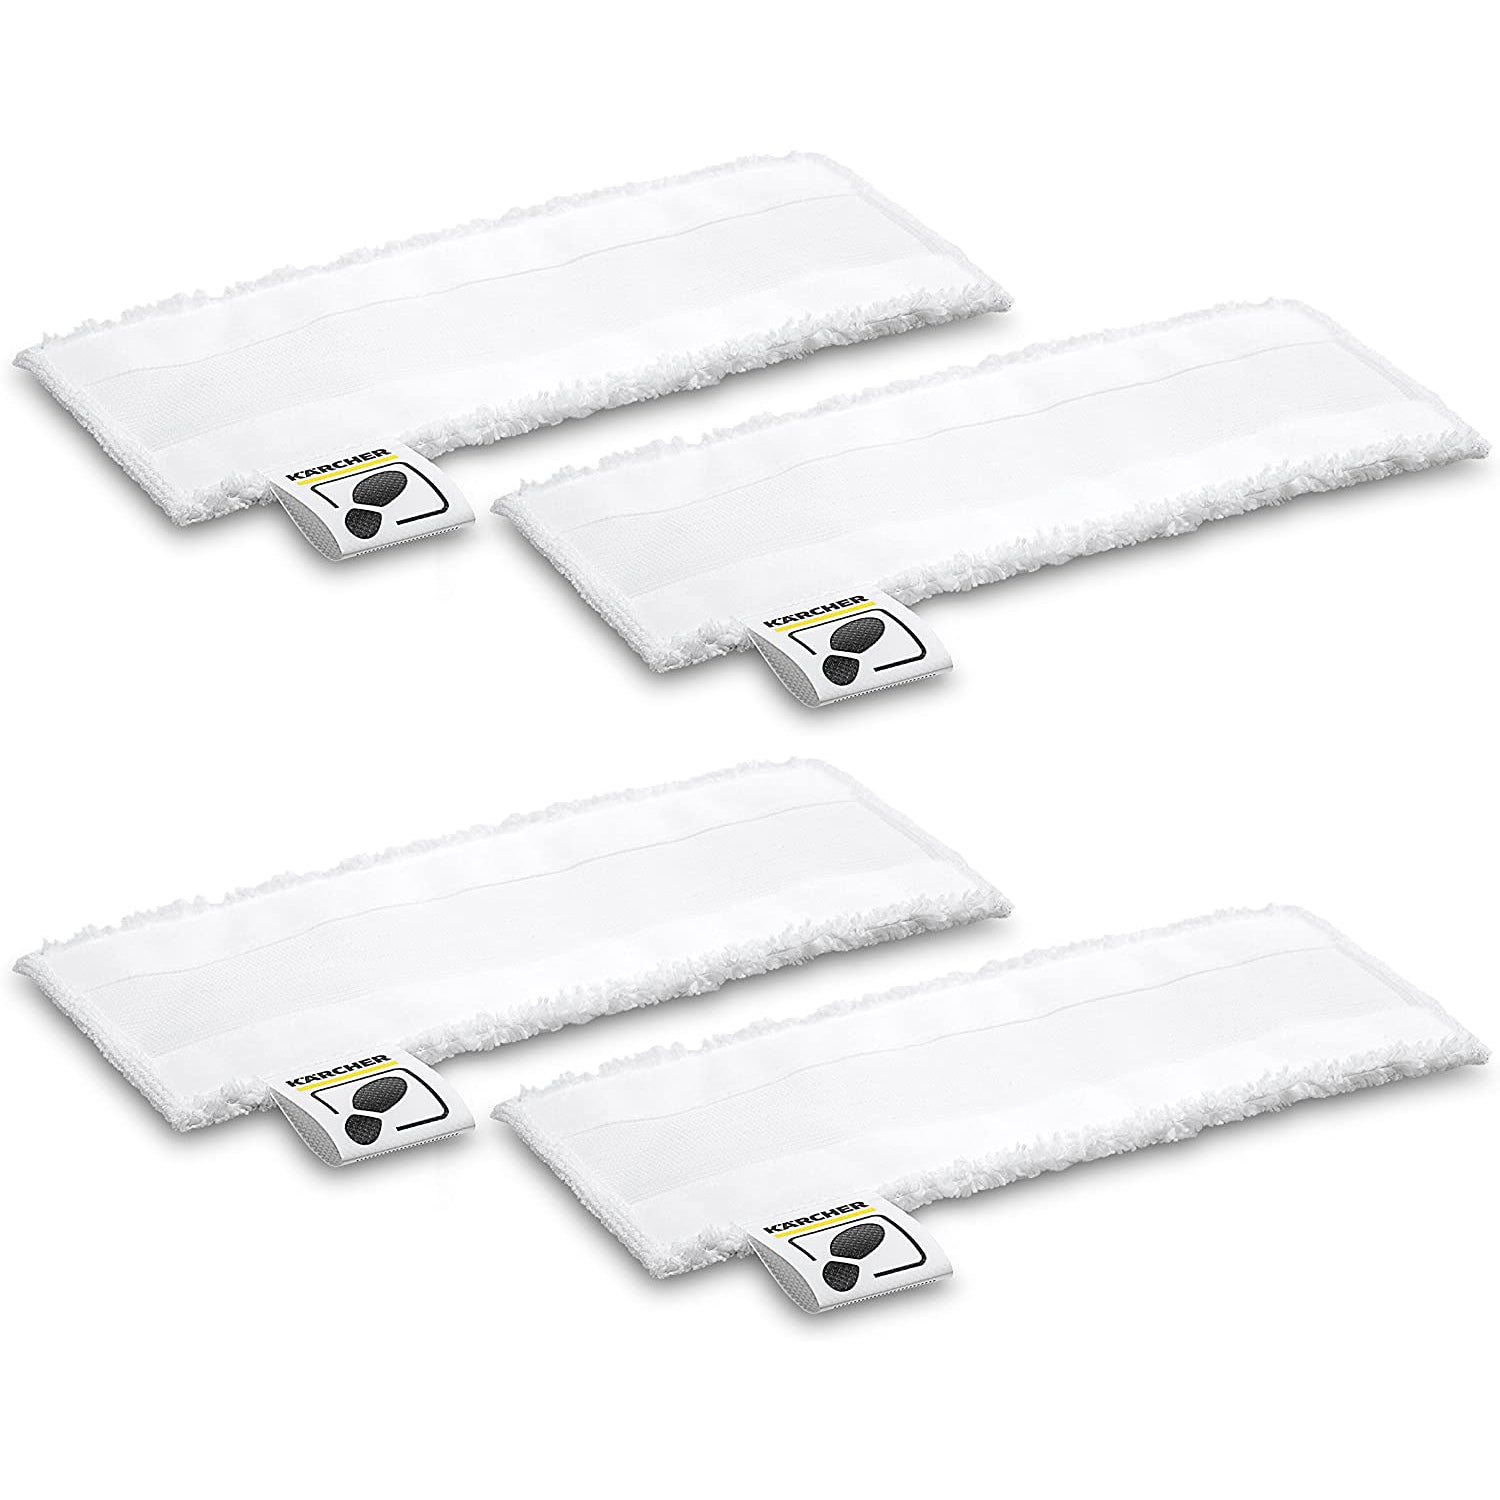 KARCHER Easyfix Floor Cloth Set Steam Cleaner Microfibre White (Pack of 4)